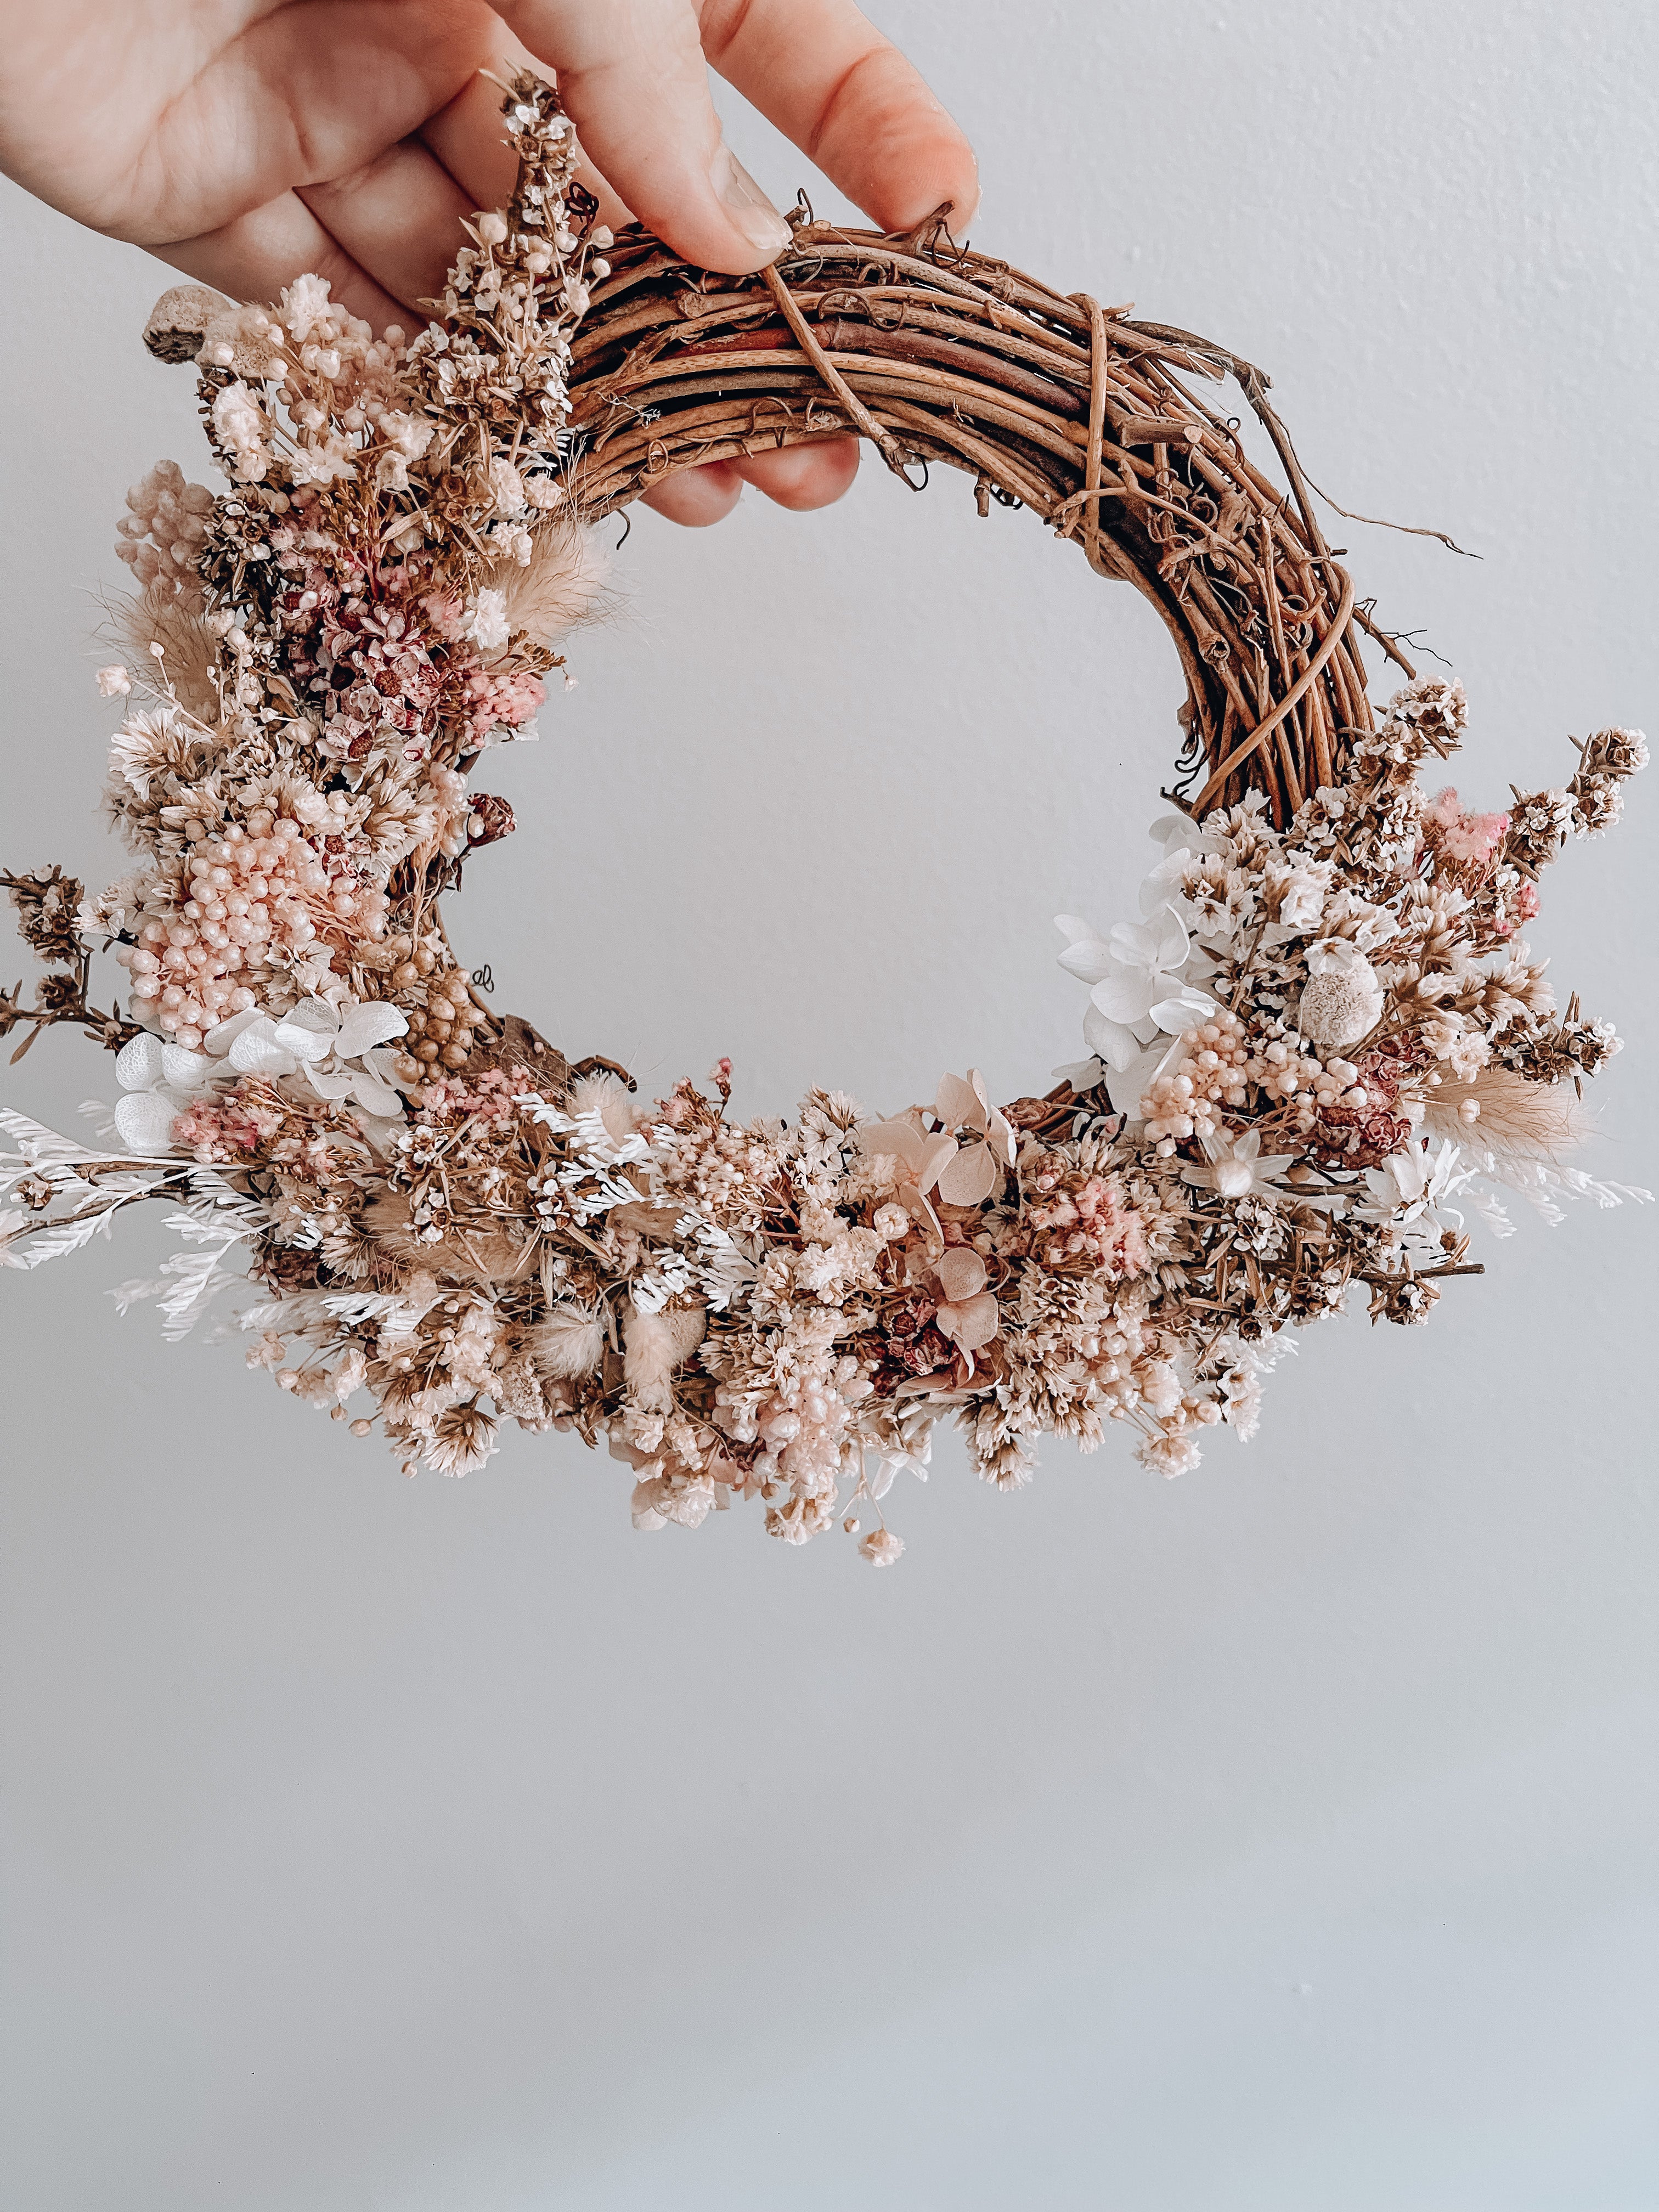 Mini everlasting floral wreaths - white/natural/blush pink.